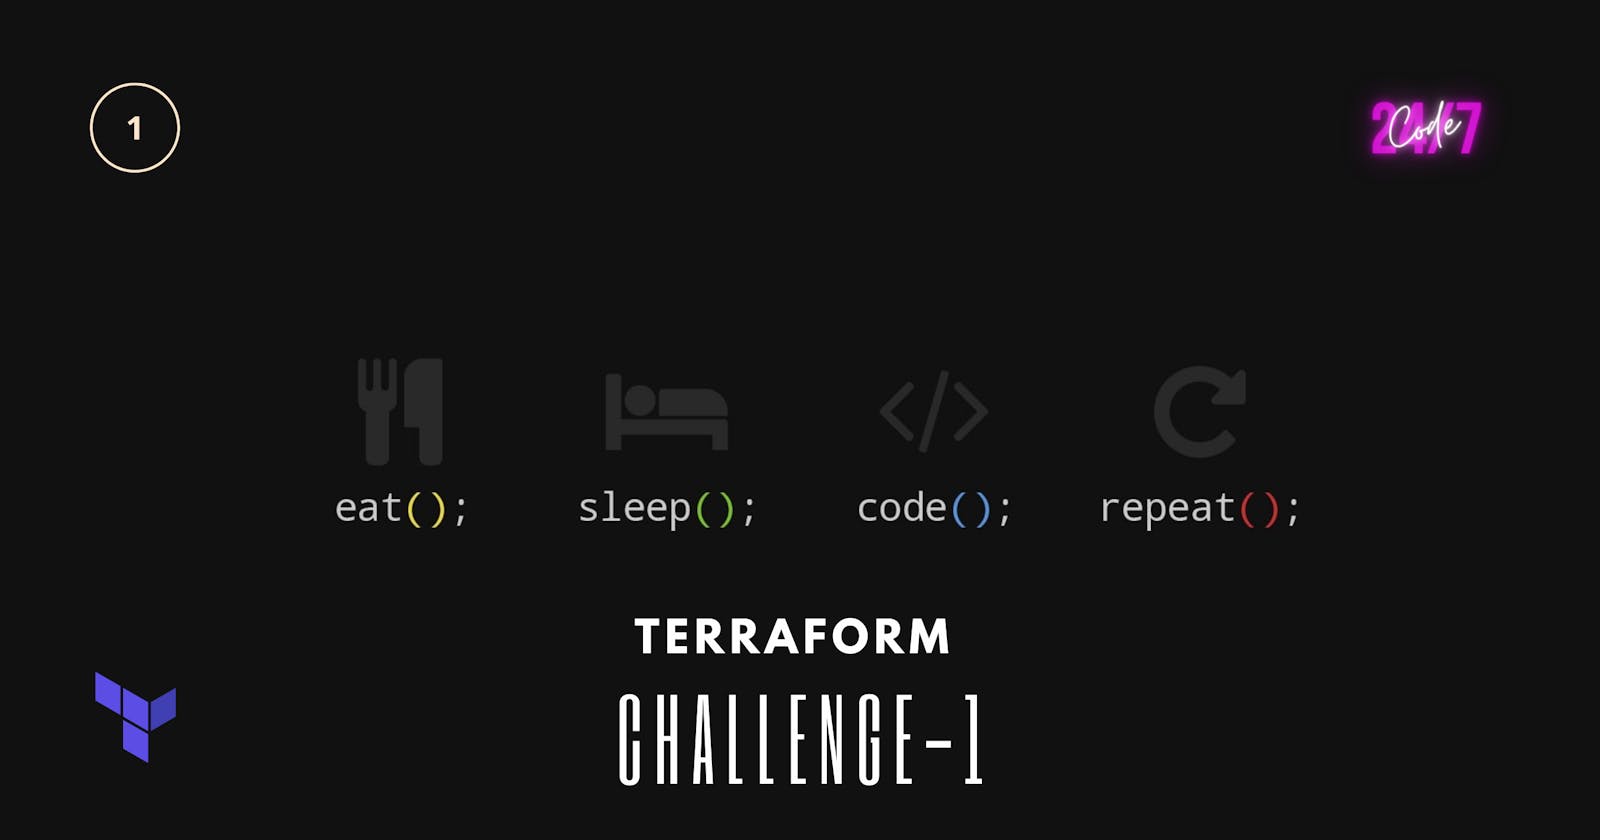 Terraform Challenge-1